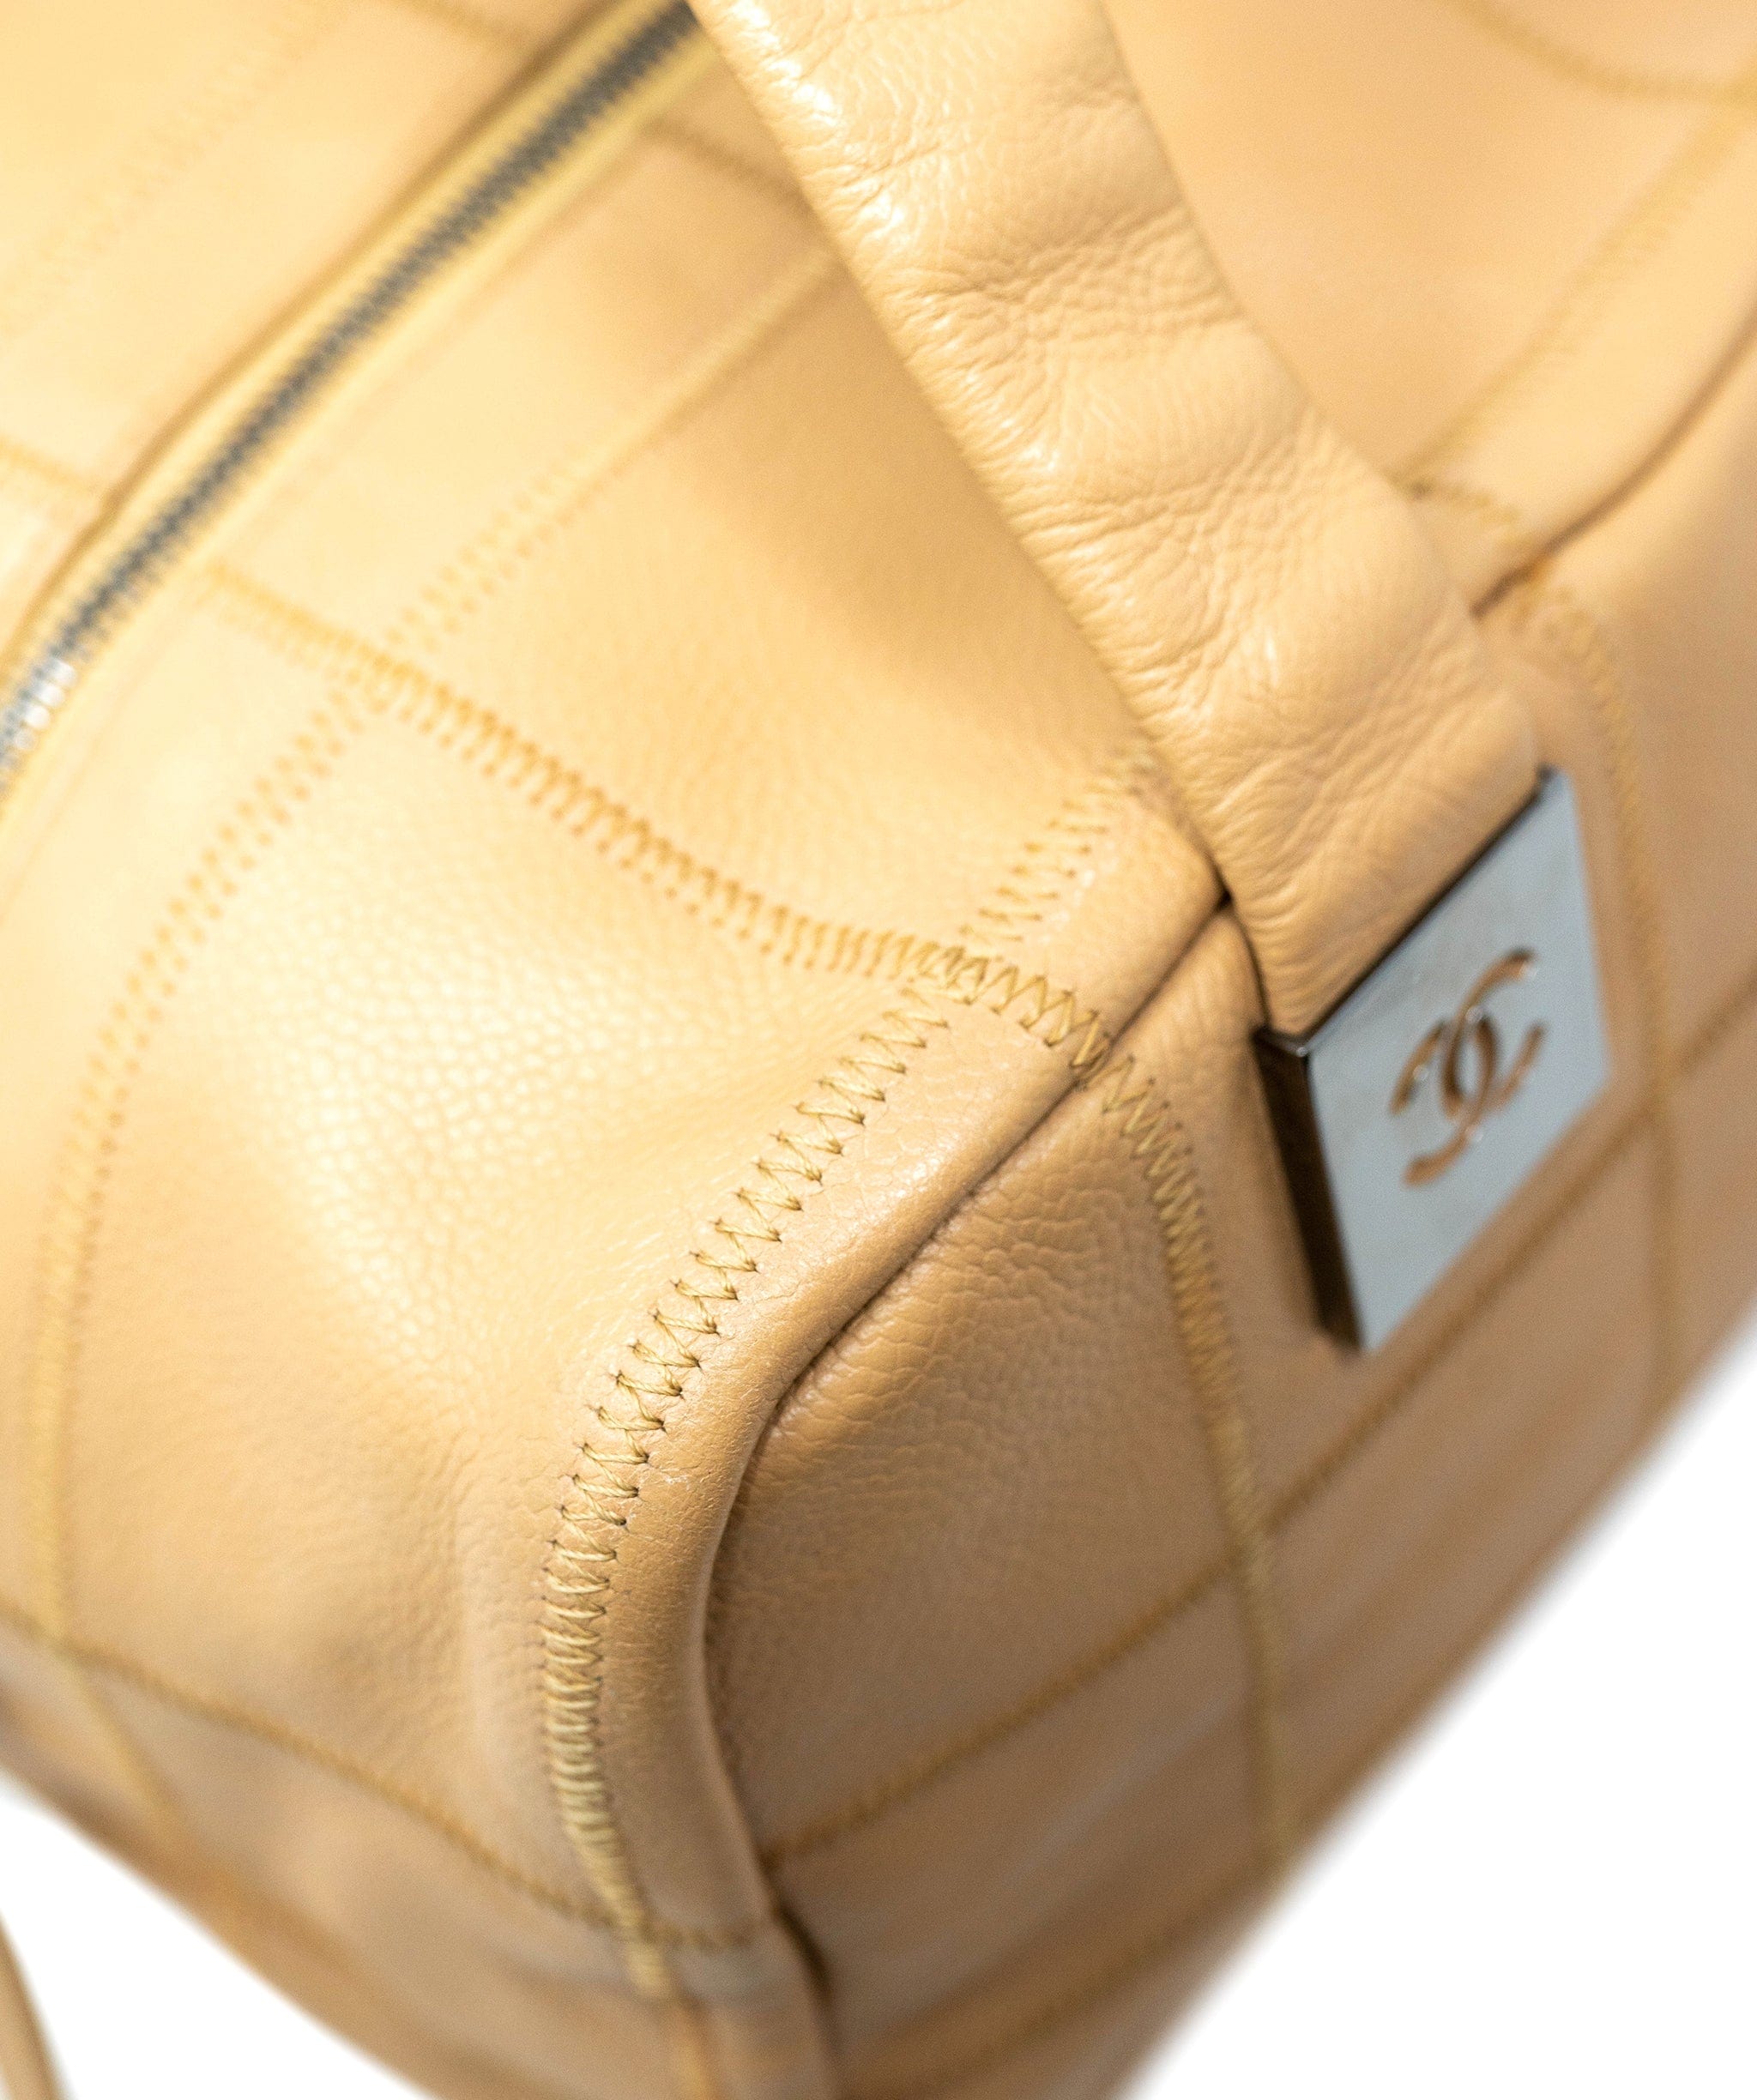 Chanel Chanel Beige Soft Leather Duffle Handbag - NW5273